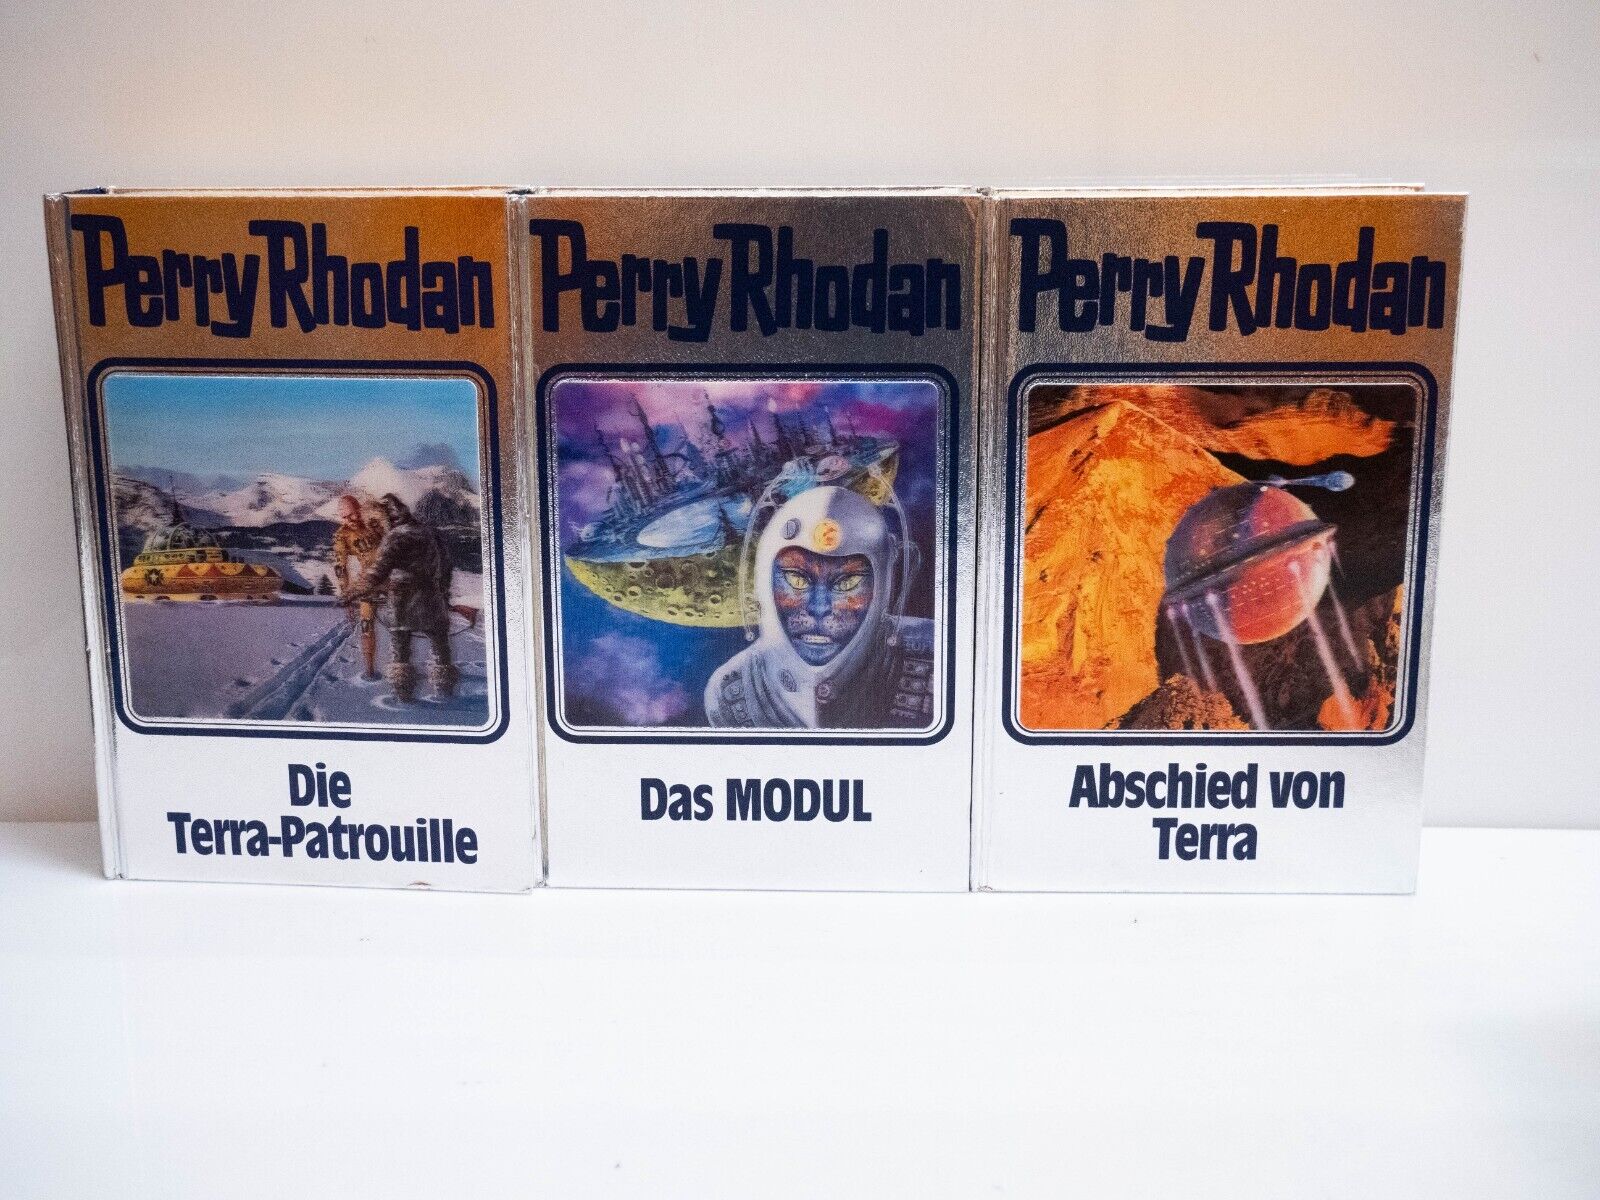 10x Perry Rhodan Silberband Bücher - Band 91-100 - Sammlung Konvolut Silberbände